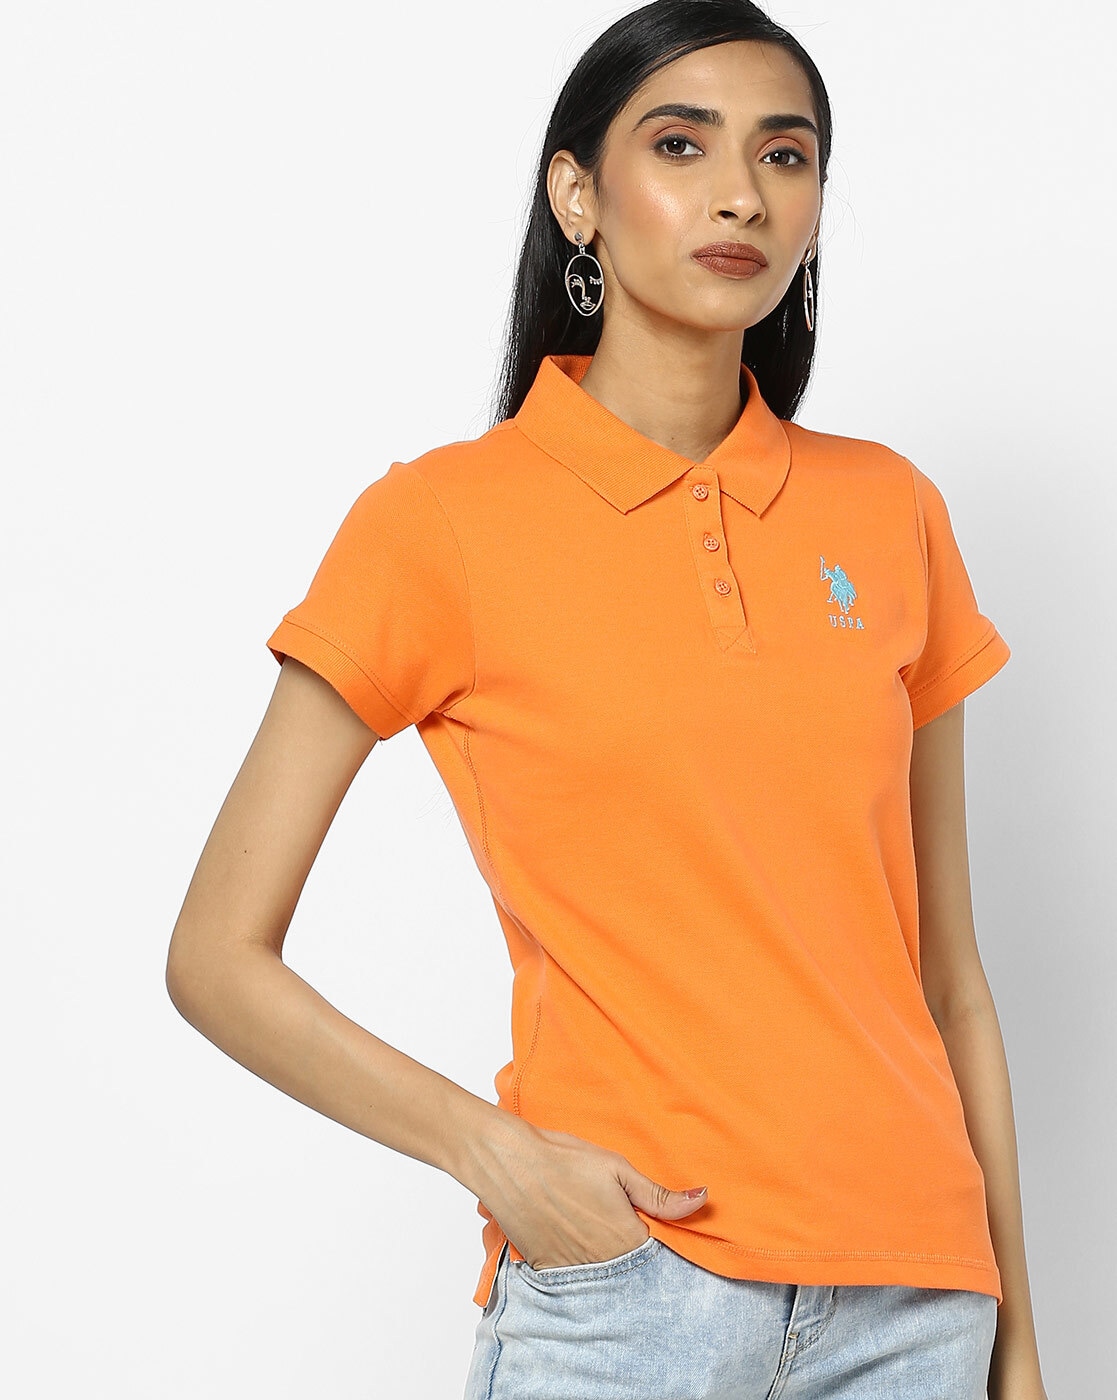 Buy Orange Tshirts for Women by U.S 